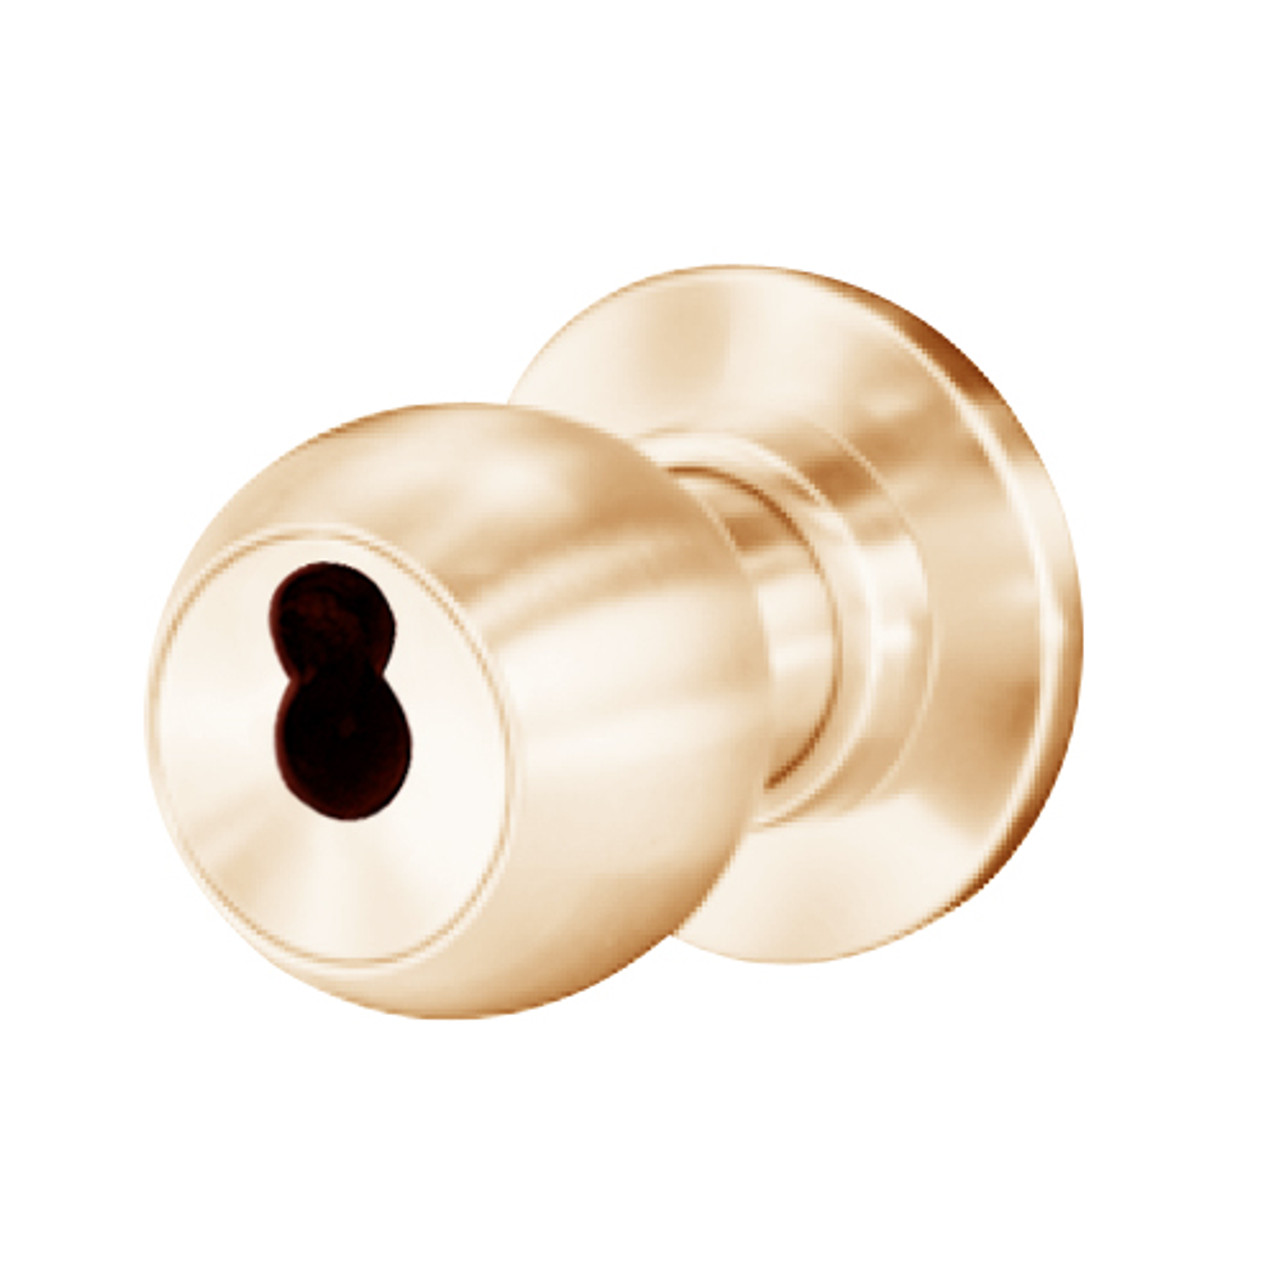 8K57YD4CS3611 Best 8K Series Exit Heavy Duty Cylindrical Knob Locks with Round Style in Bright Bronze